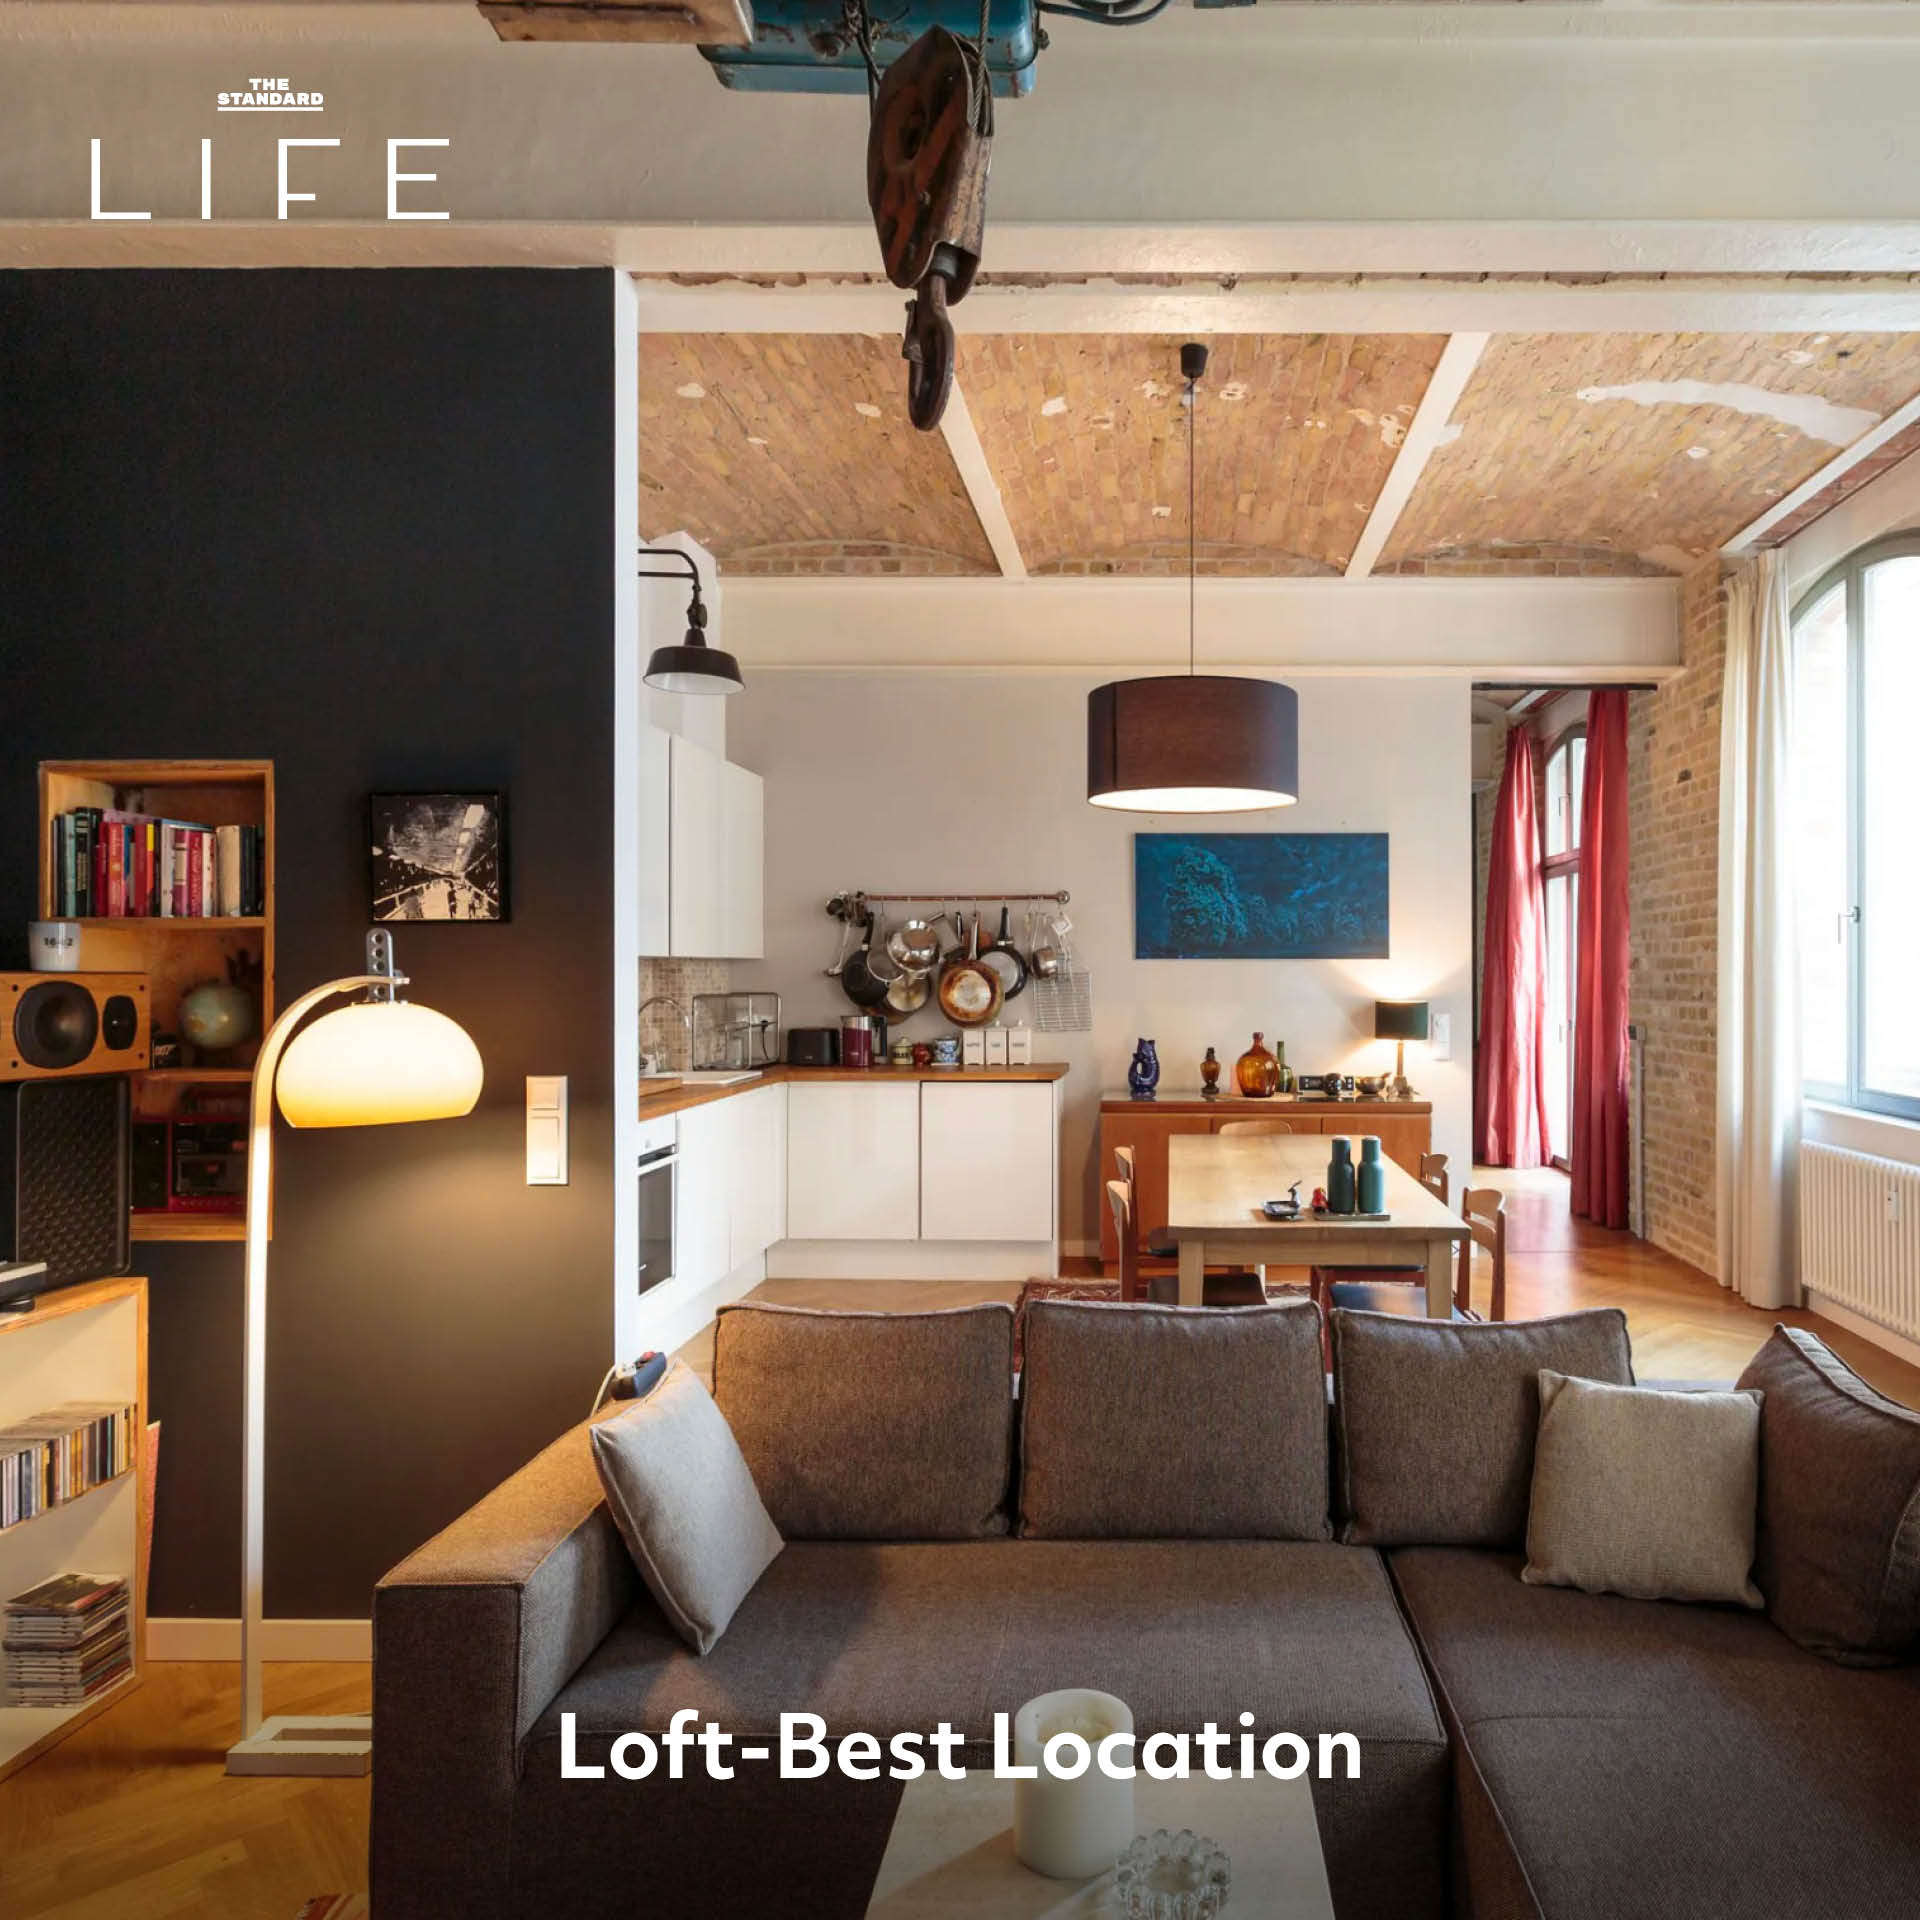 Loft-Best Location